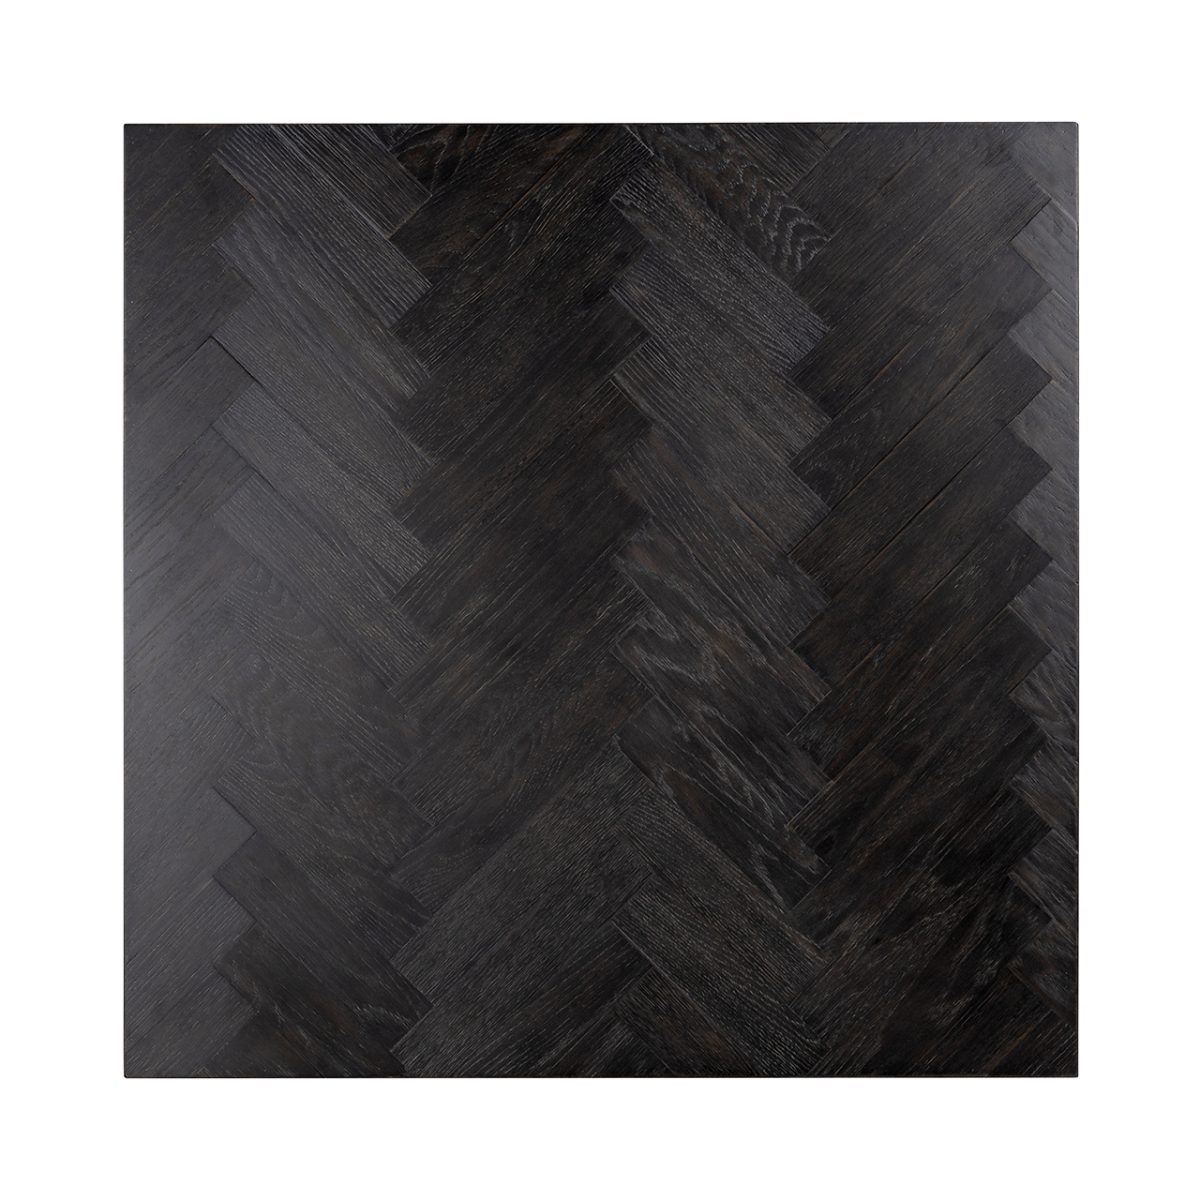 7418 - Salontafel Blackbone silver 90x90 (Block) (Black rustic)